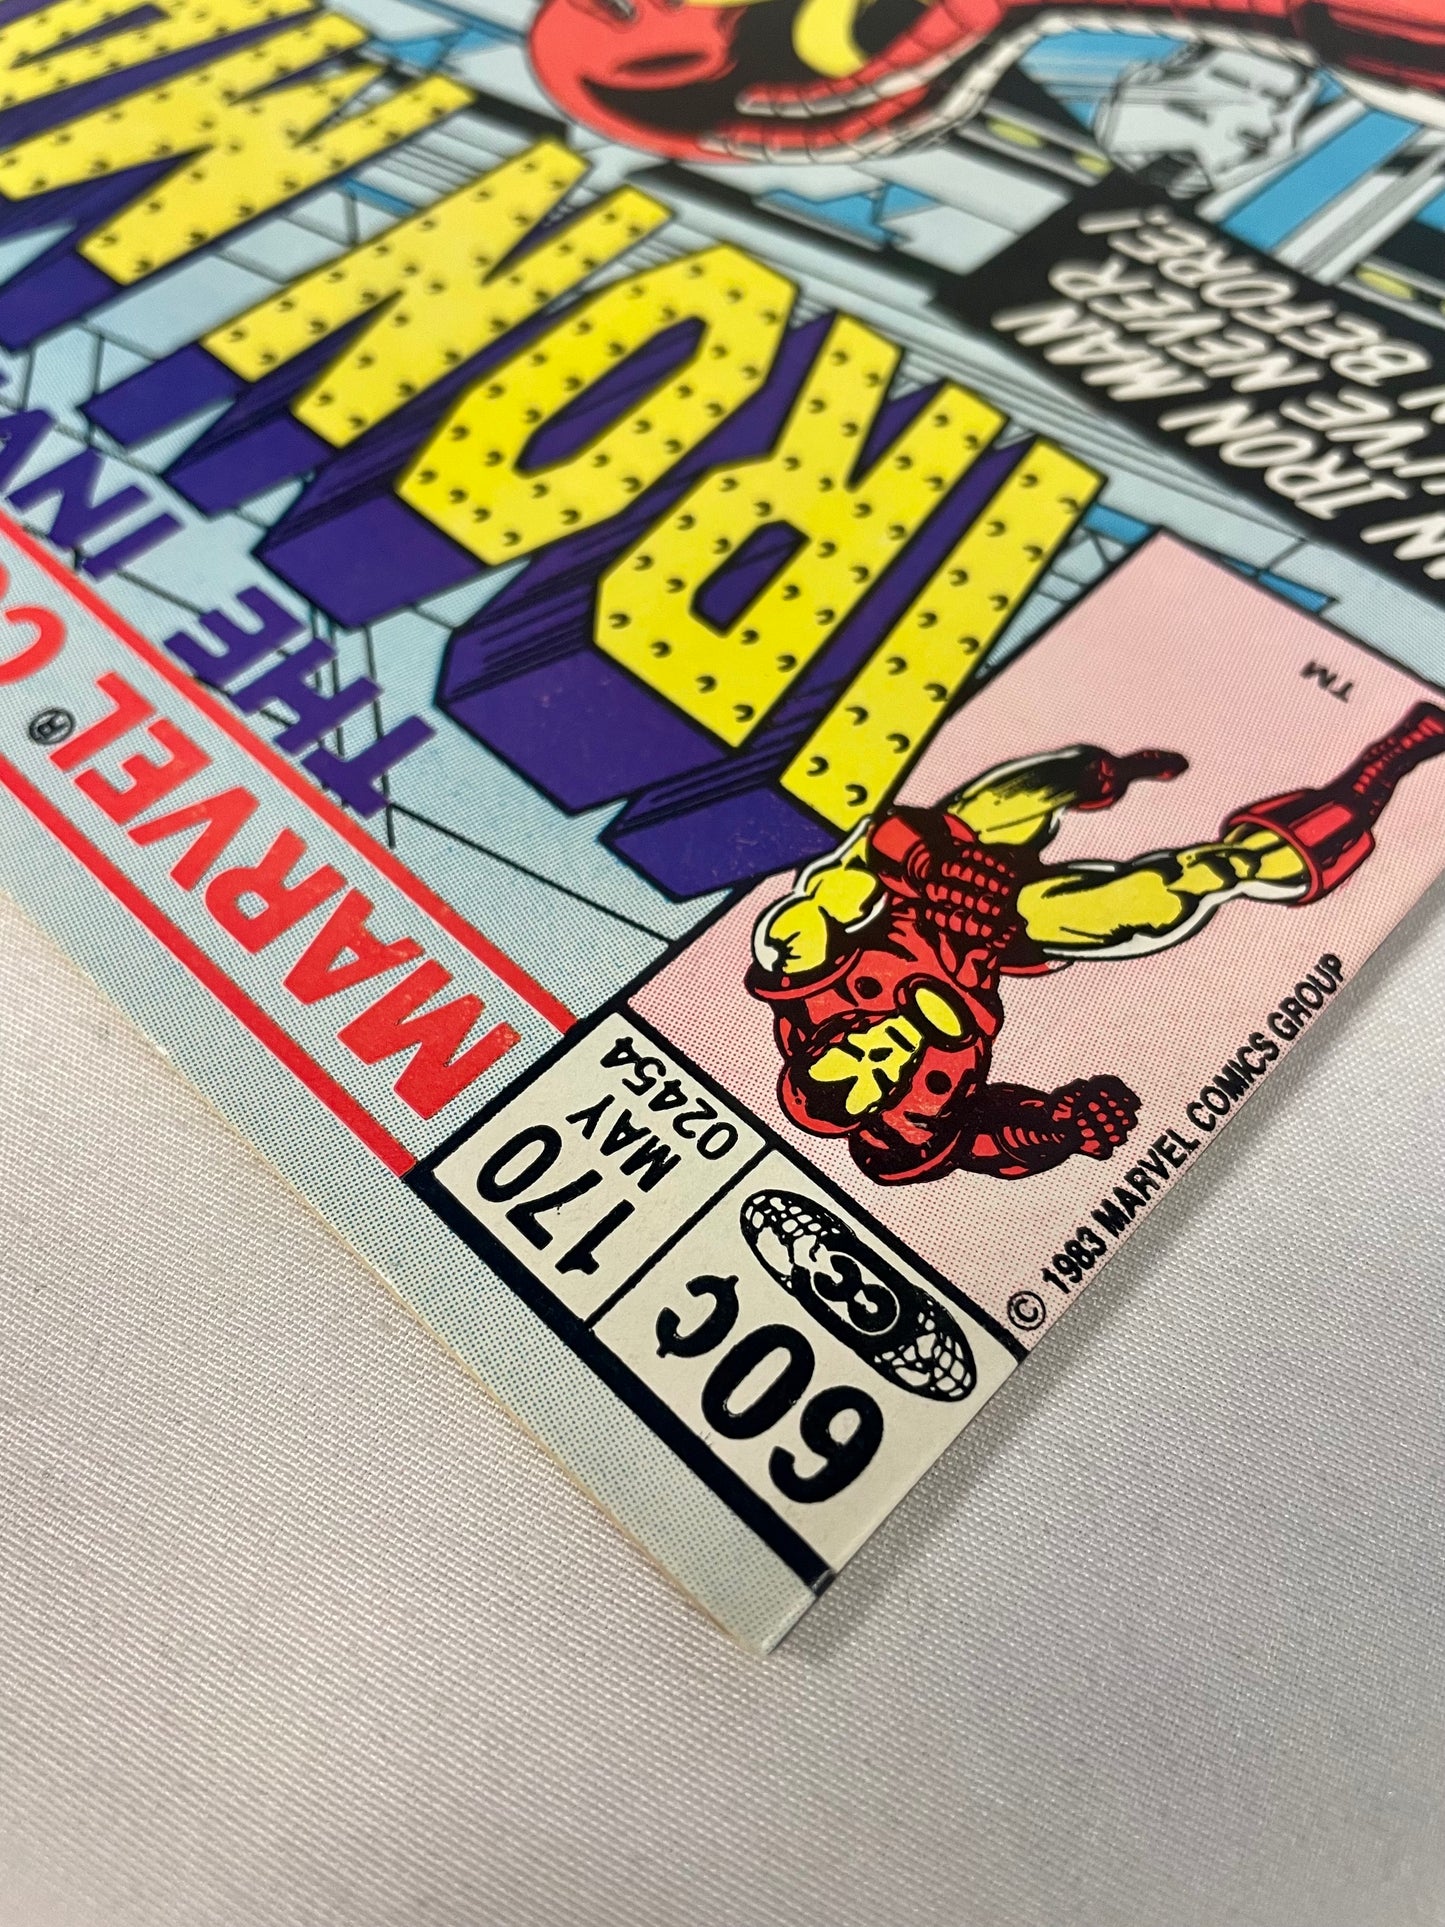 Marvel Comics The Invincible Iron Man #170